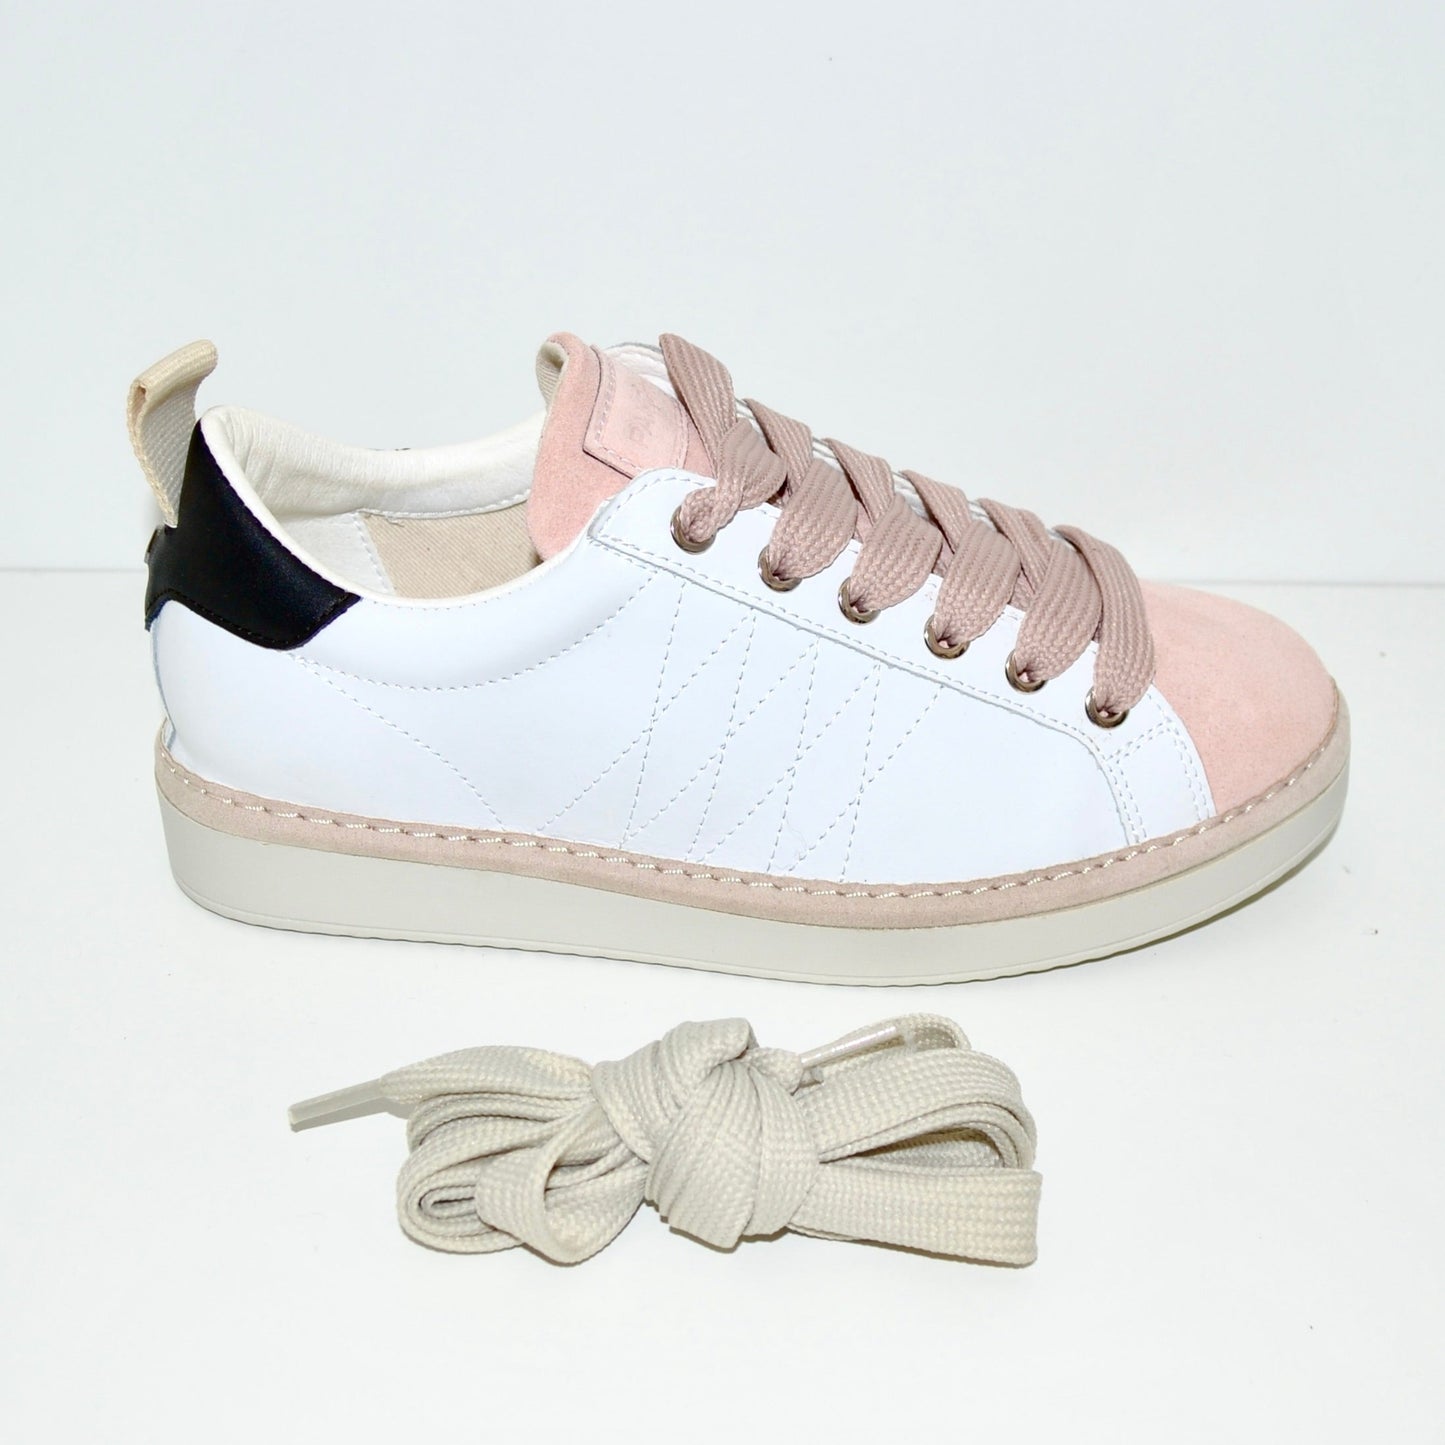 Sneakers Panchic donna pelle bianco e camoscio rosa